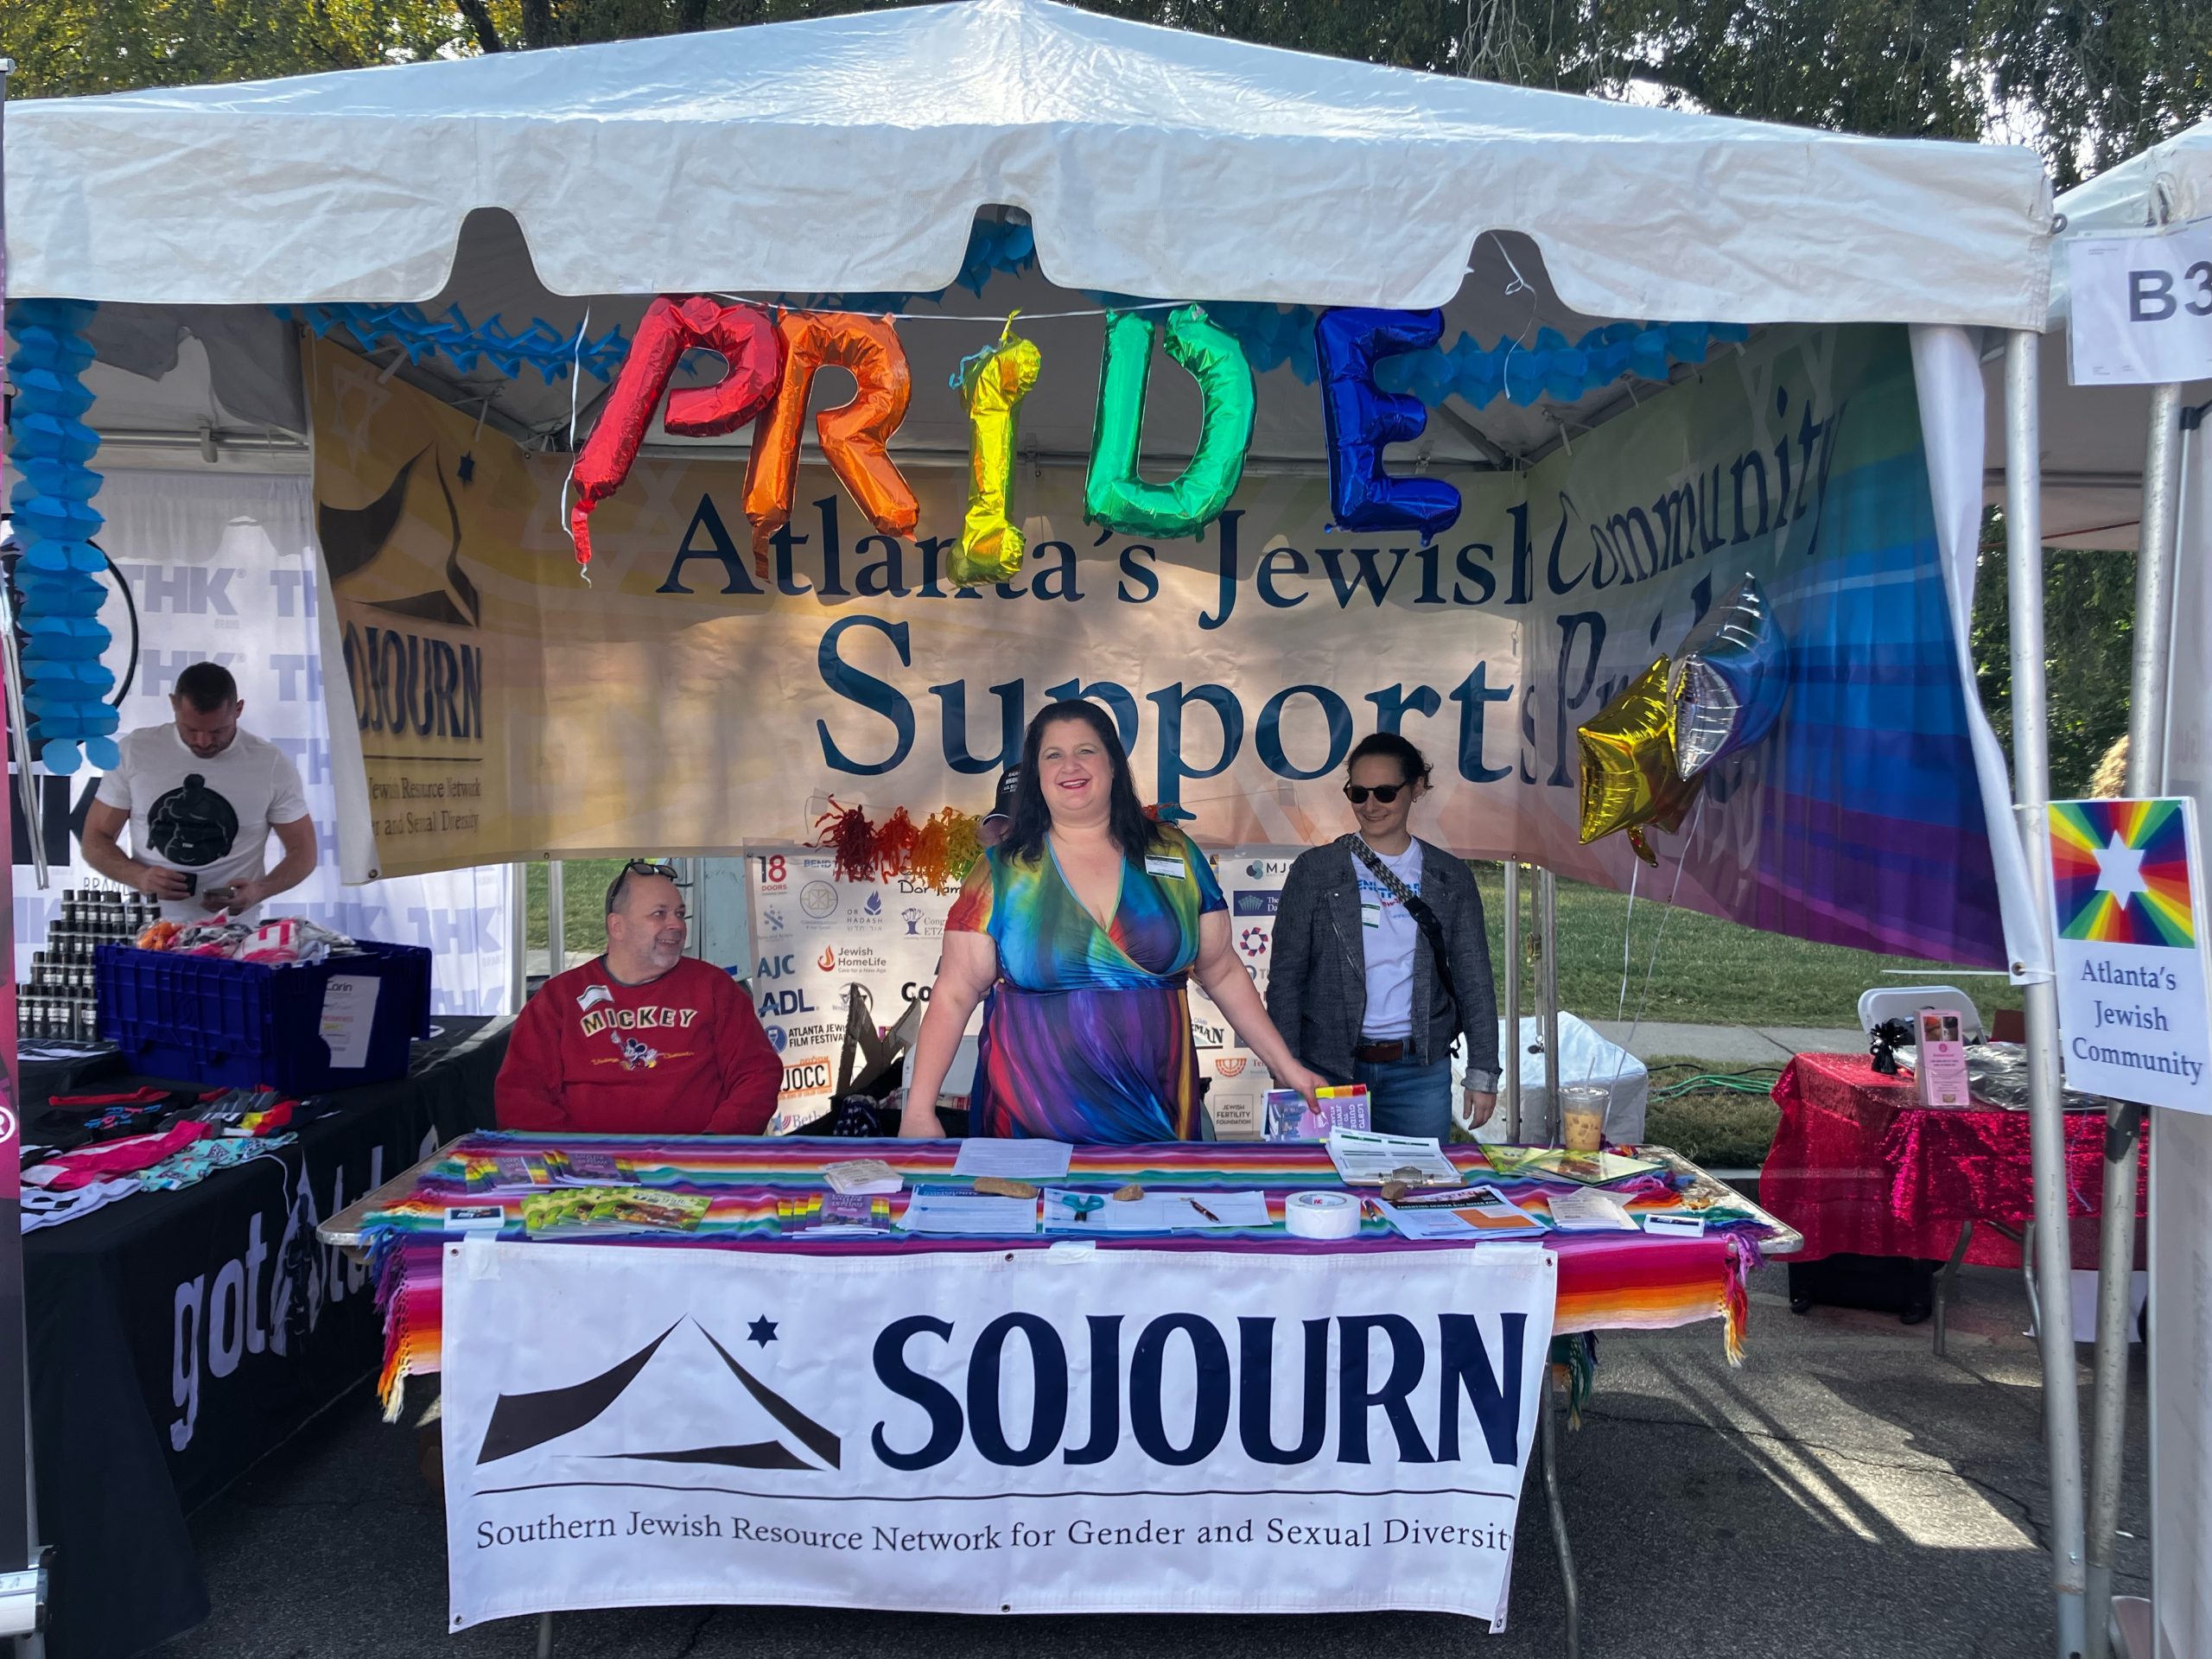 SOJOURN's Atlanta Pride booth with volunteers